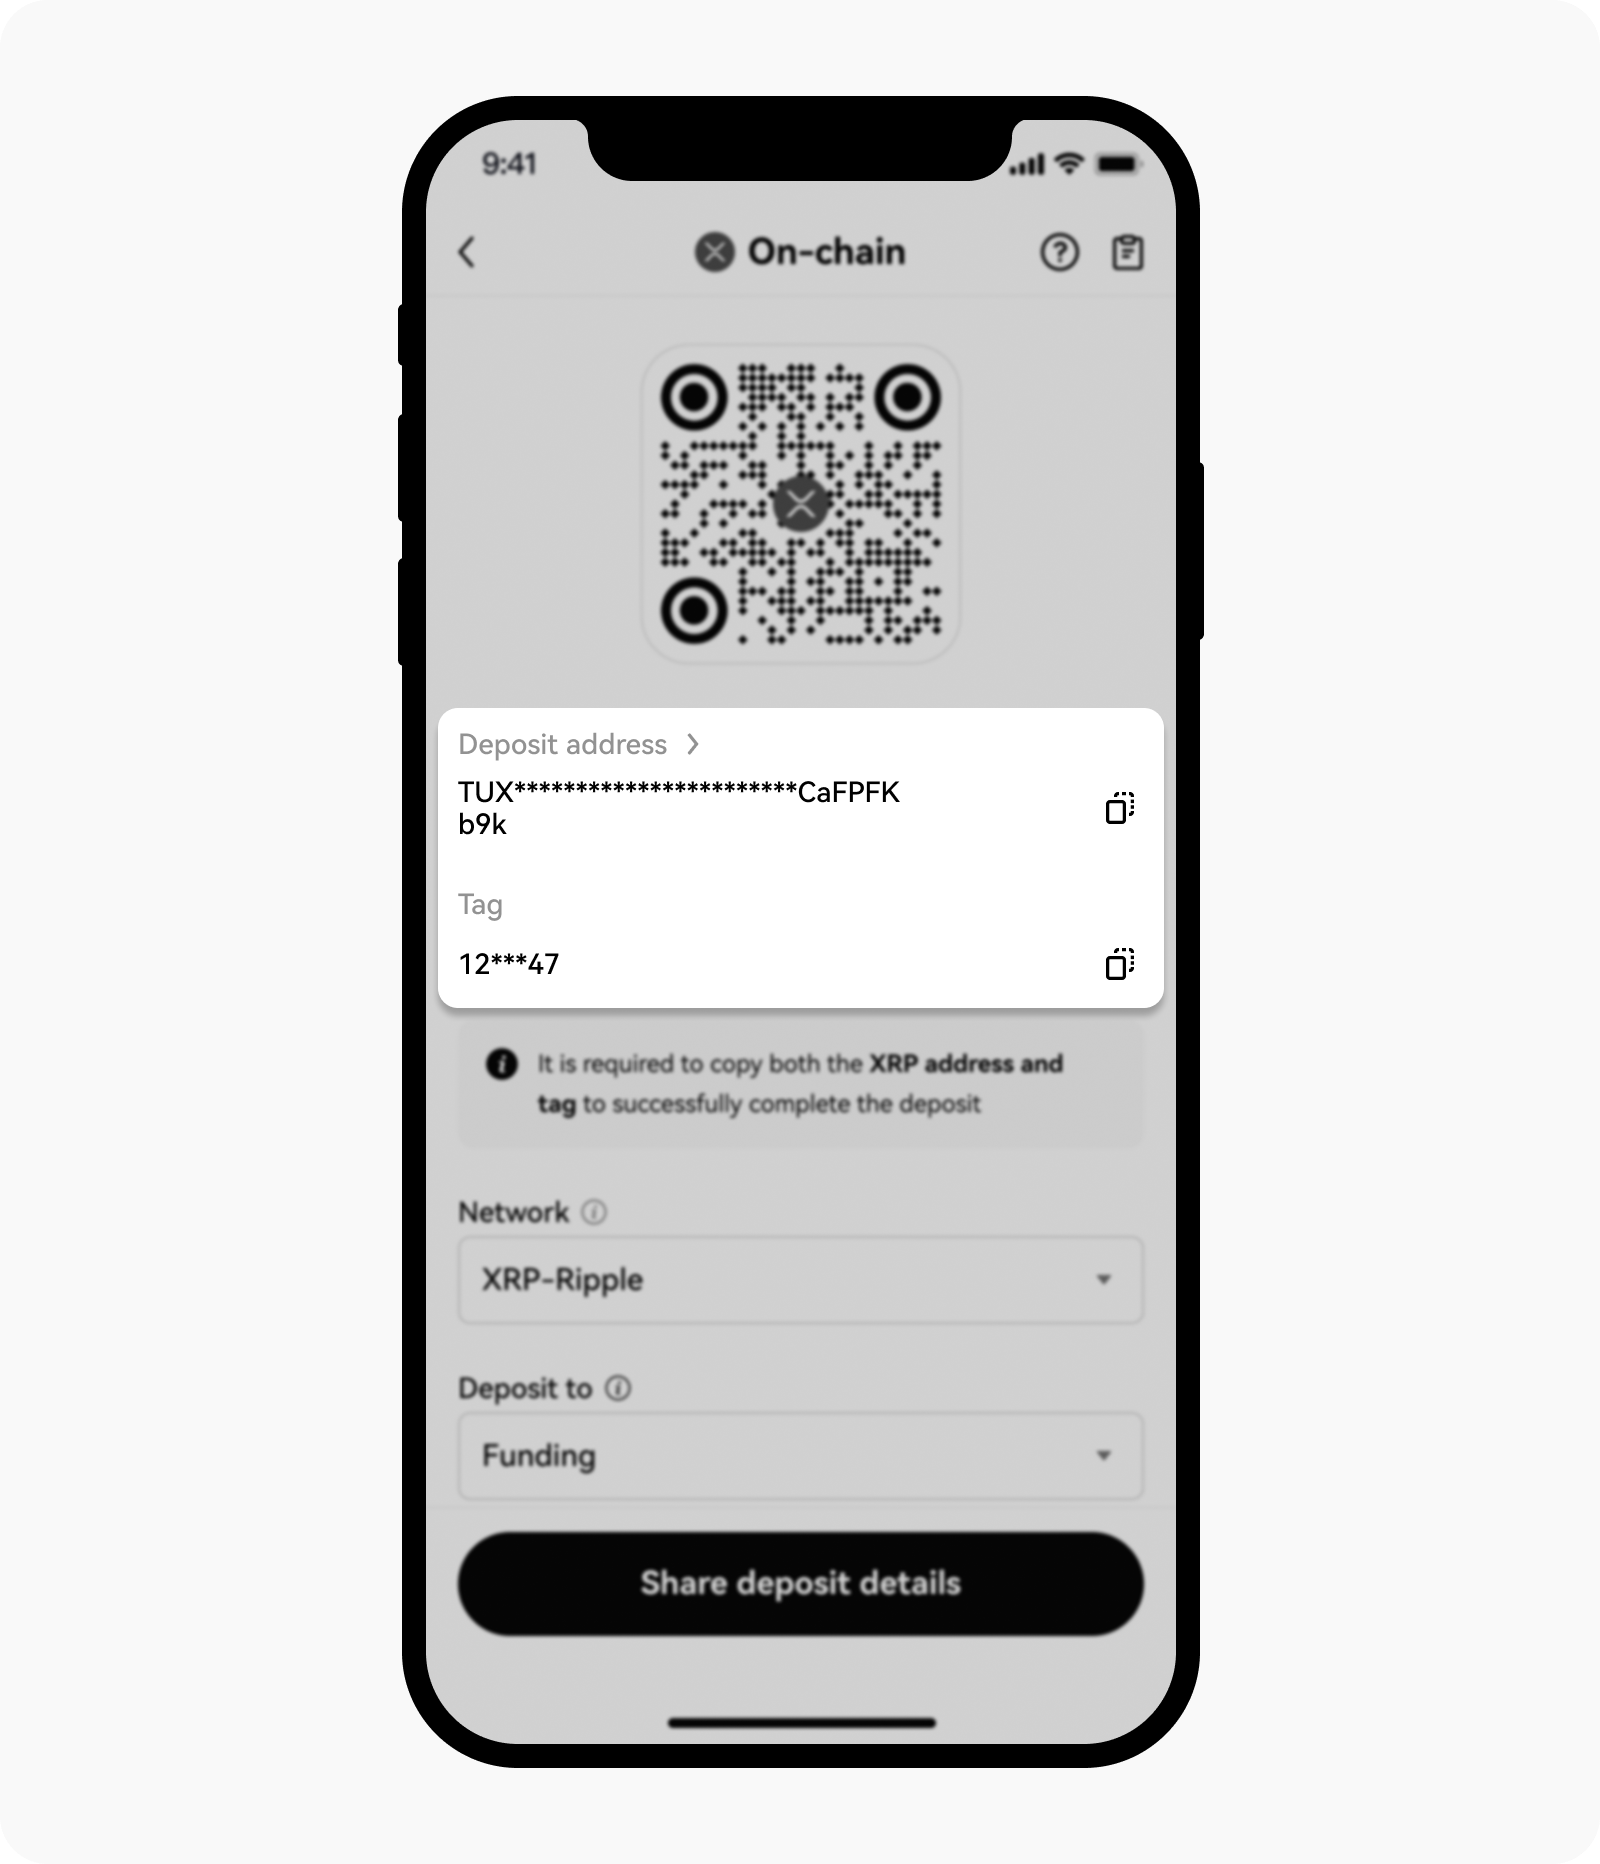 App deposit with tag